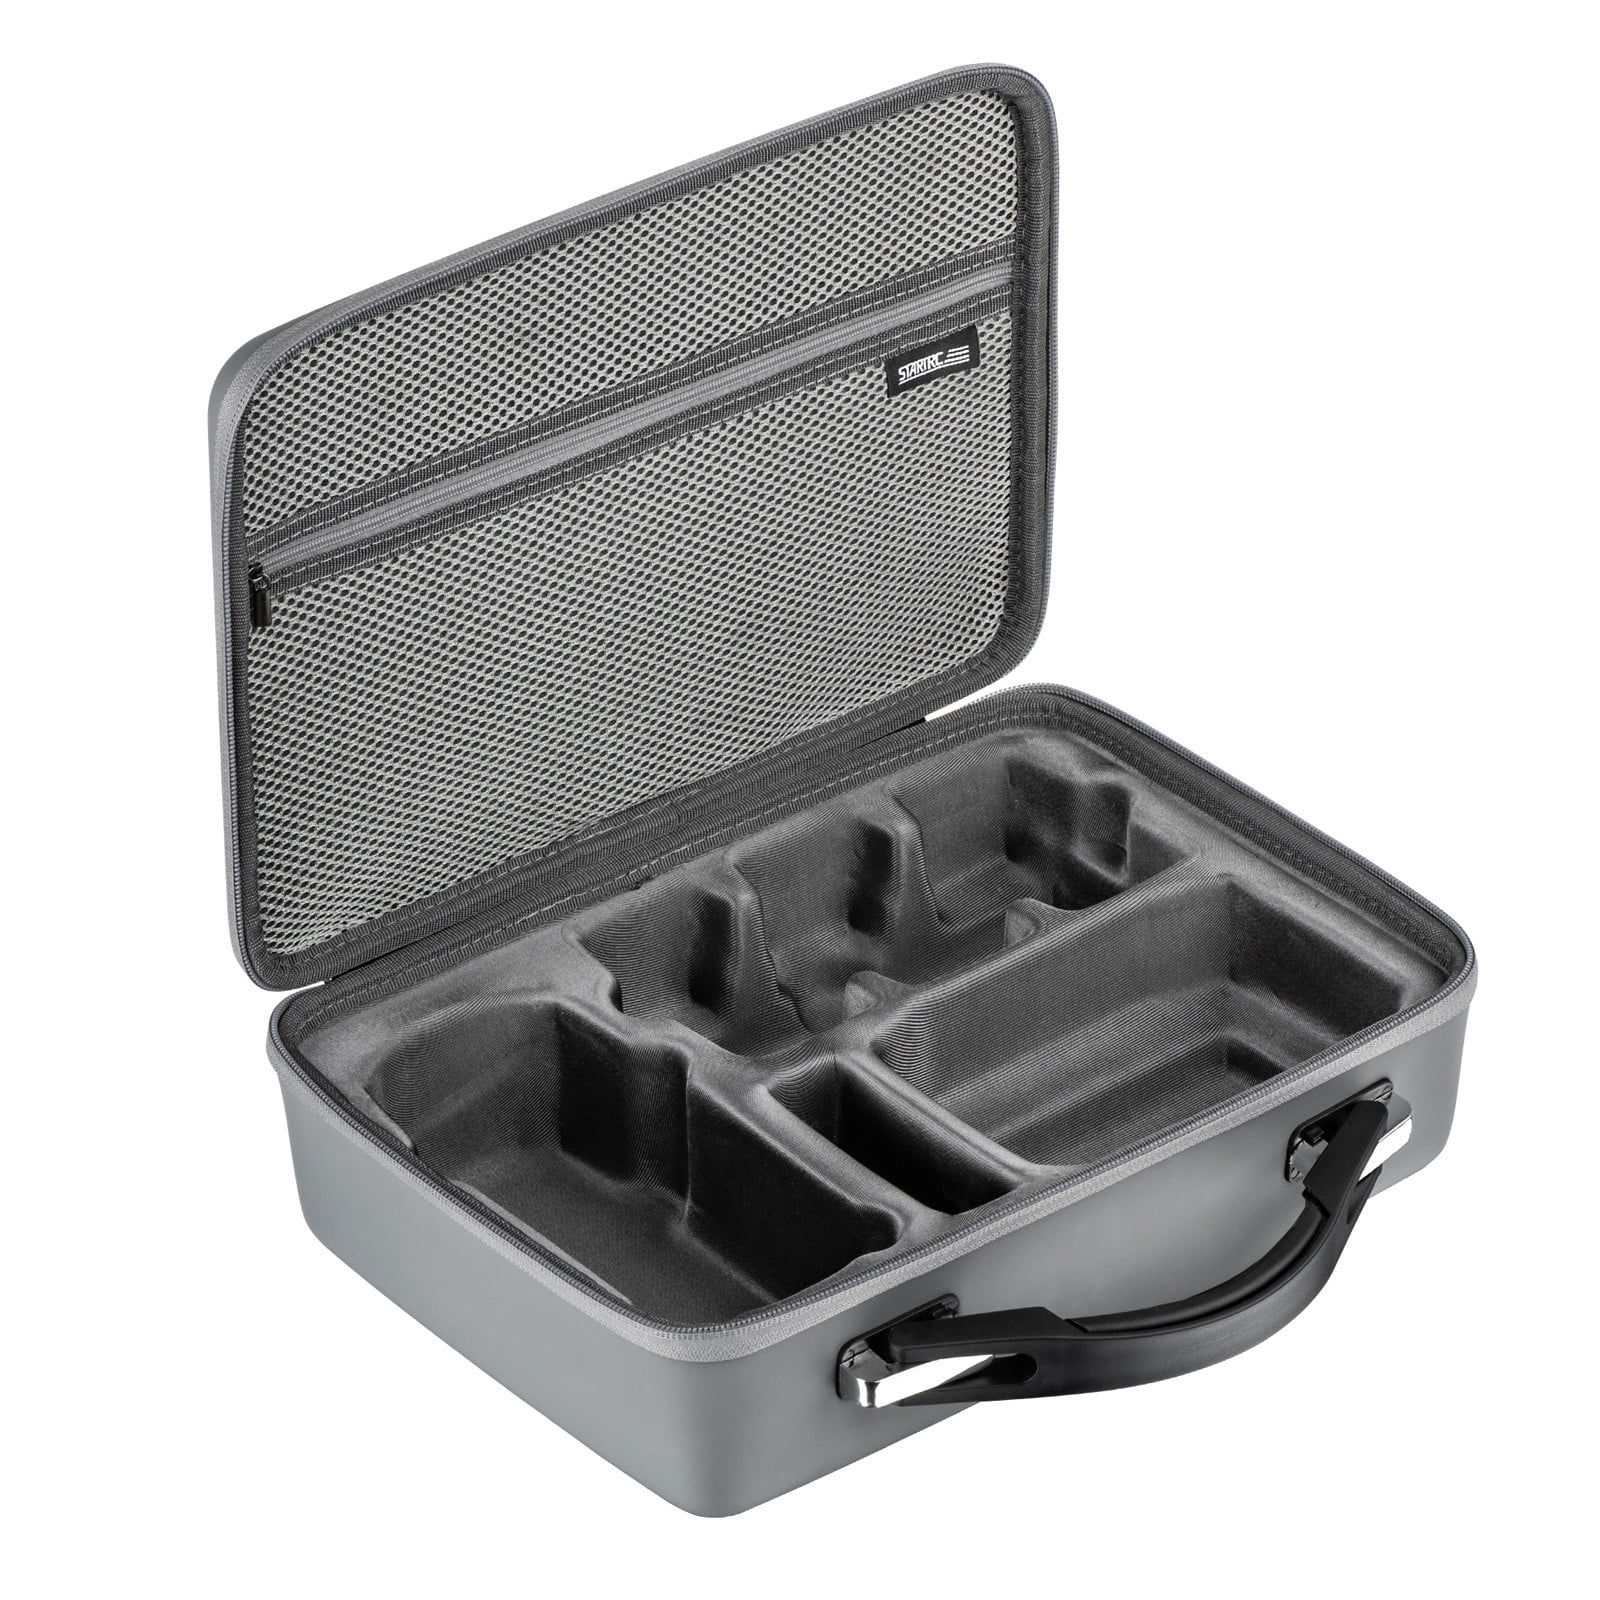 For DJI Mavic Air 2 Durable Storage Bag Suitcase Carrying Box Waterproof Case